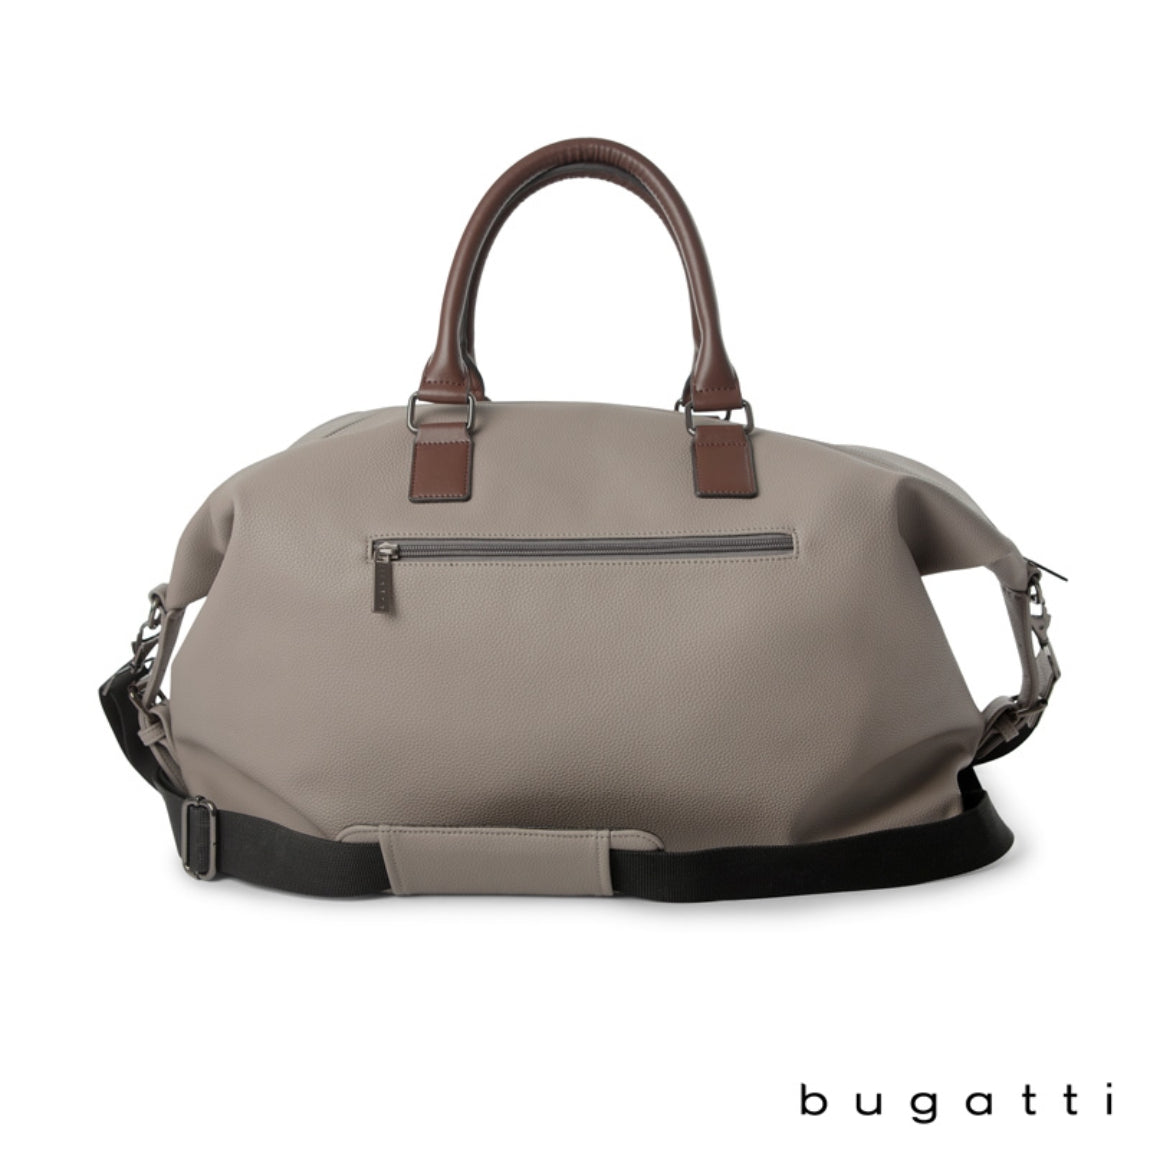 Bugatti Contrast Collection Duffel Bag